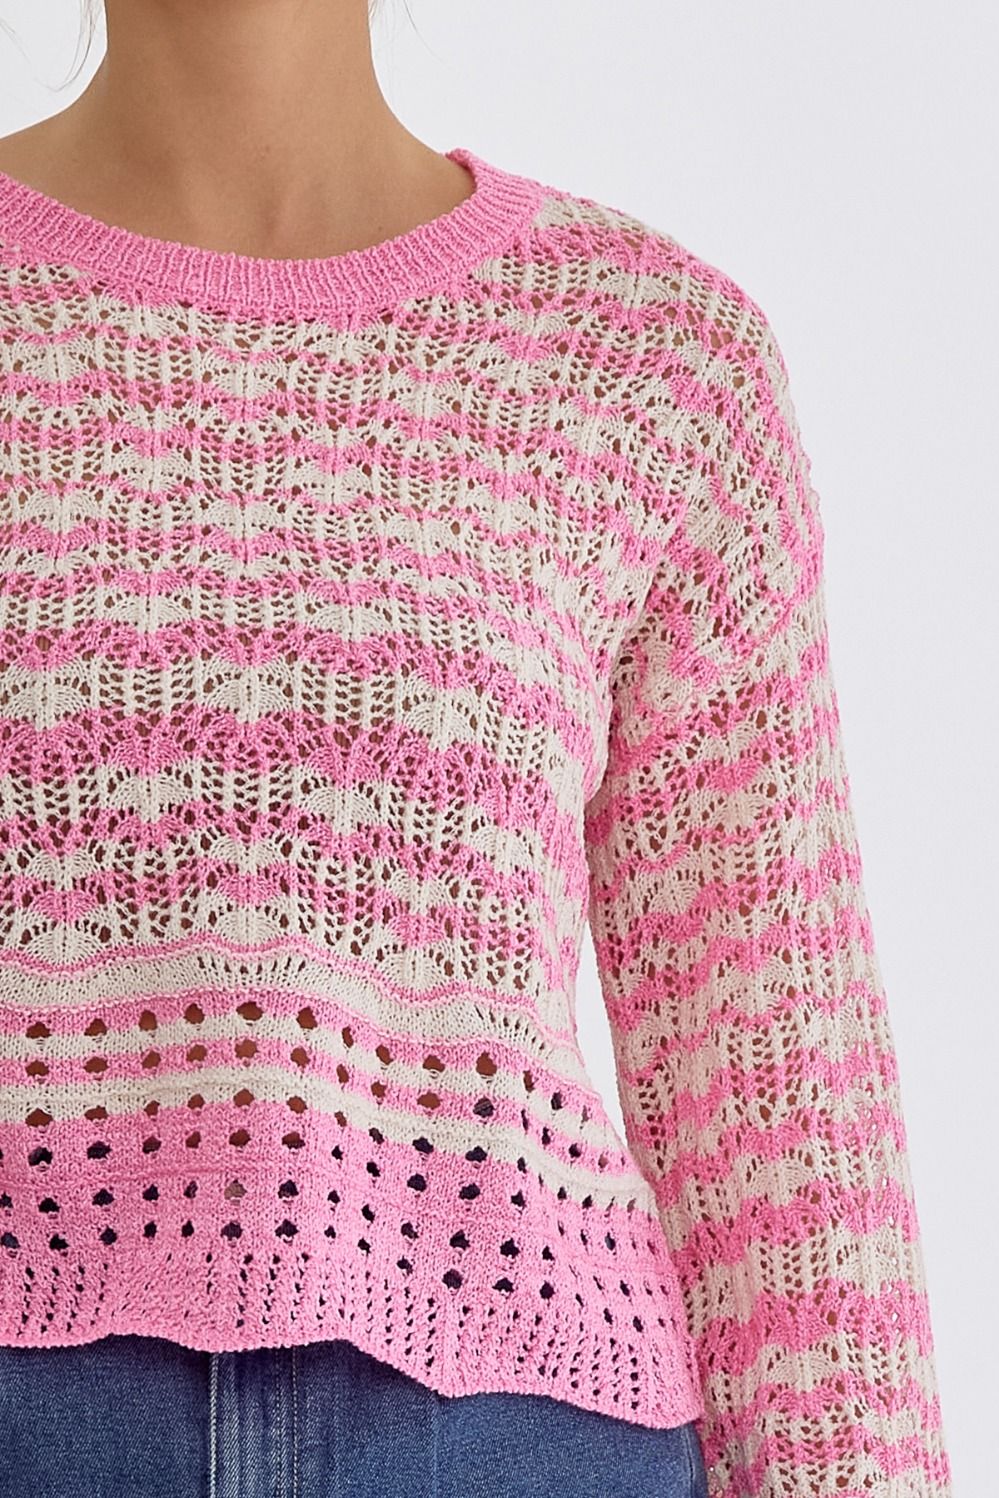 Trudy Striped Sweater (Pink)